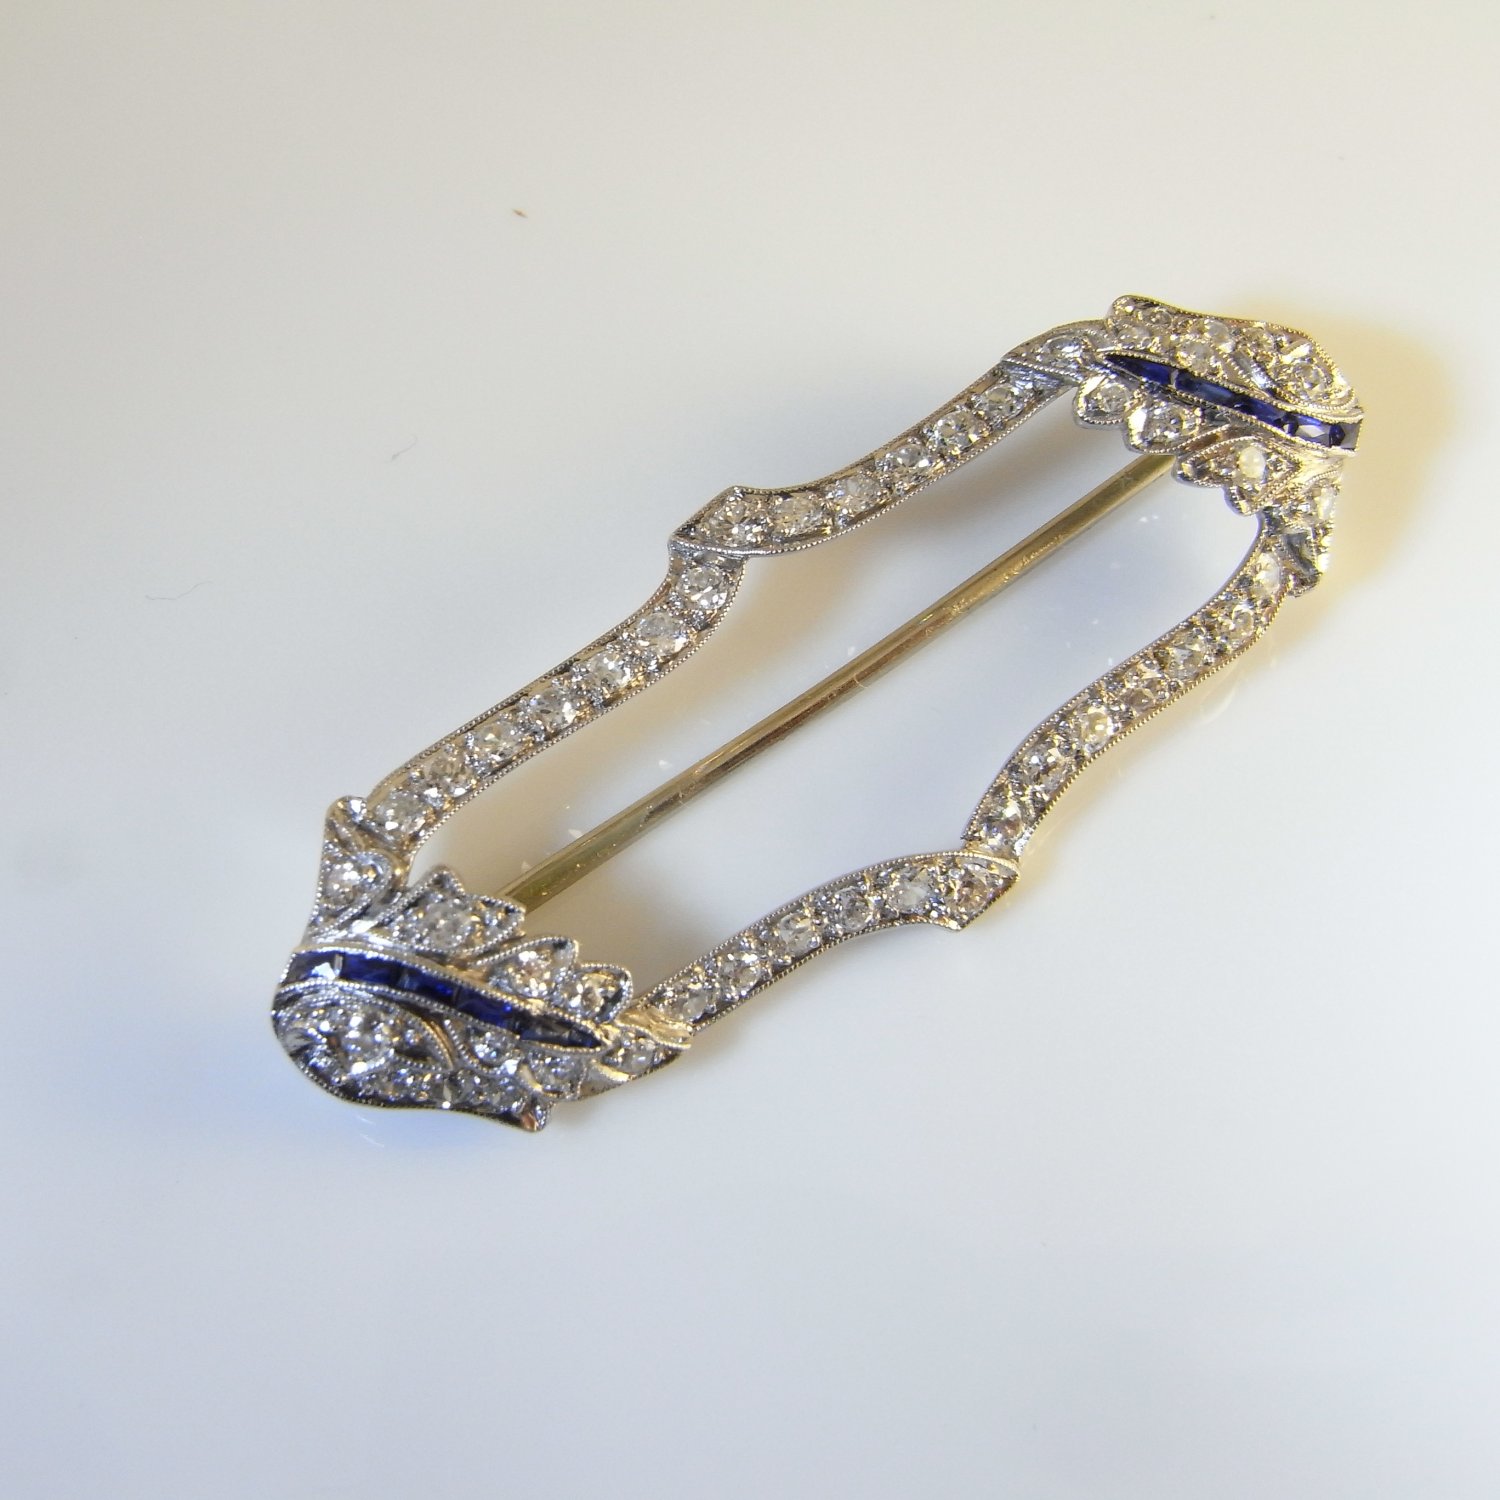 Fine Art Deco Hand made Platinum Diamond Sapphire Brooch Pin Edwardian Belle Epoque Circa 1900 Blue White Antique Old Cut Diamonds Dainty Delicate Bridal Wedding Anniversary One of a Kind Jewelry